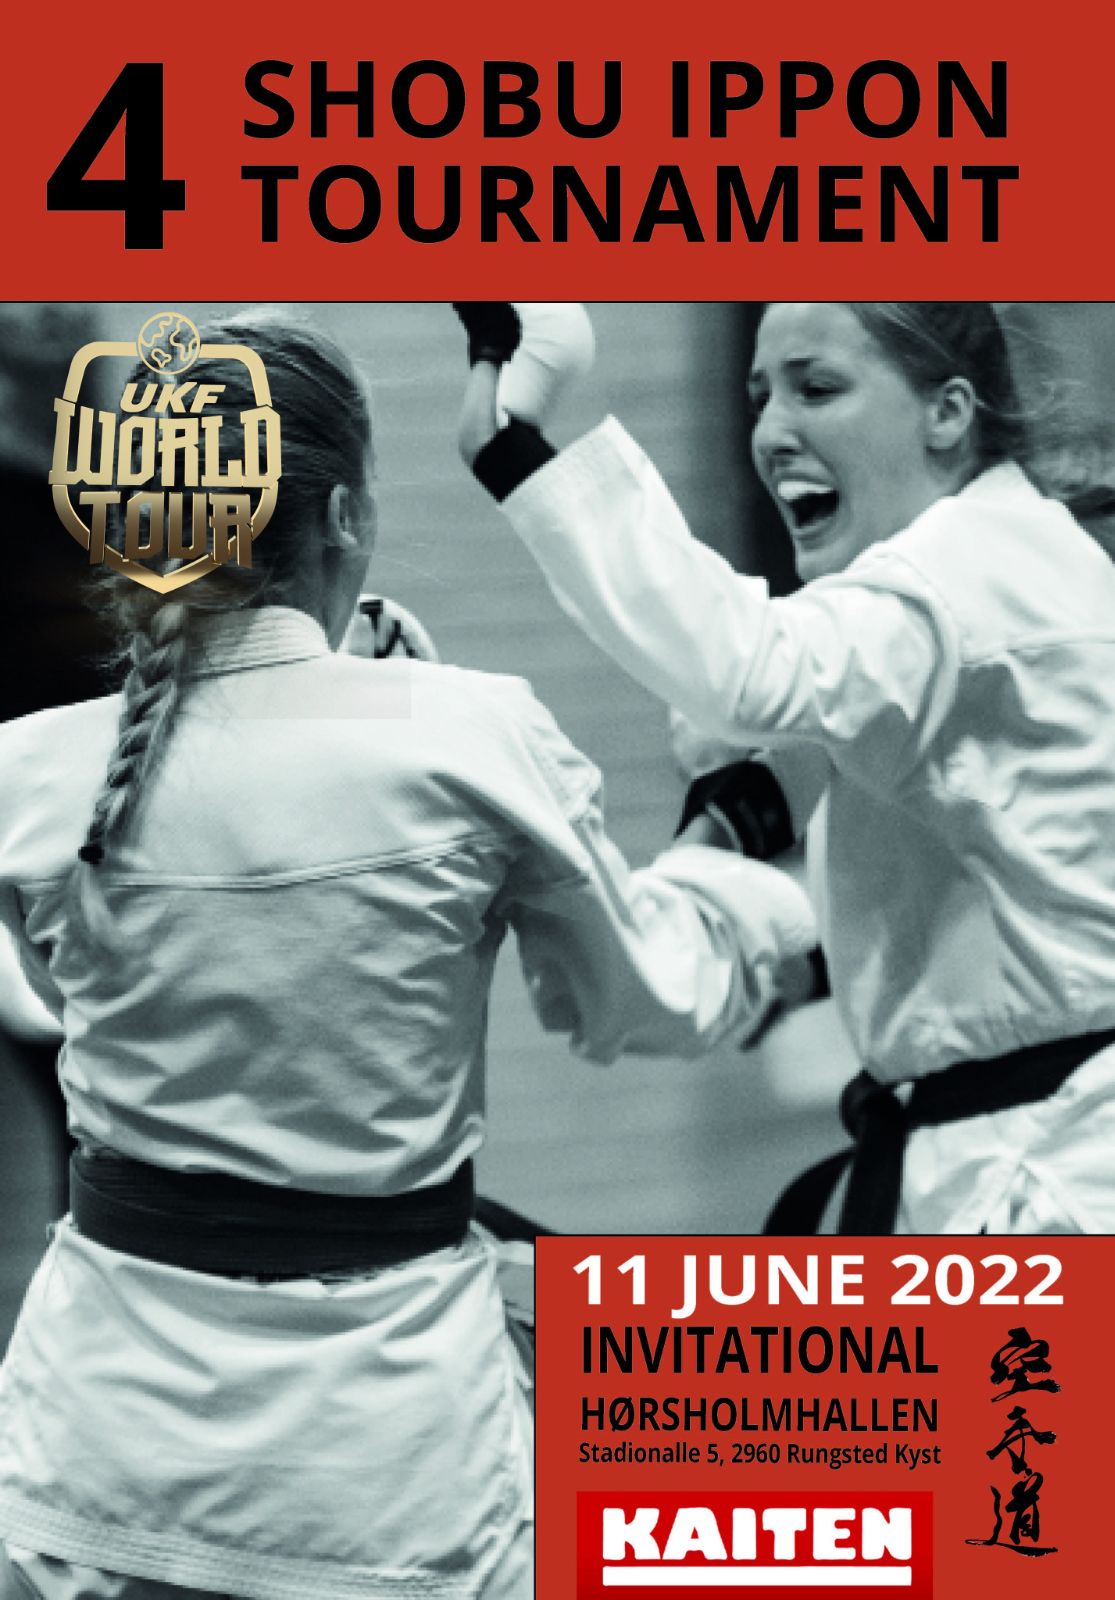 Shobu Ippon Tournament 2022 - Horsholm (Dania)ukf.jpg